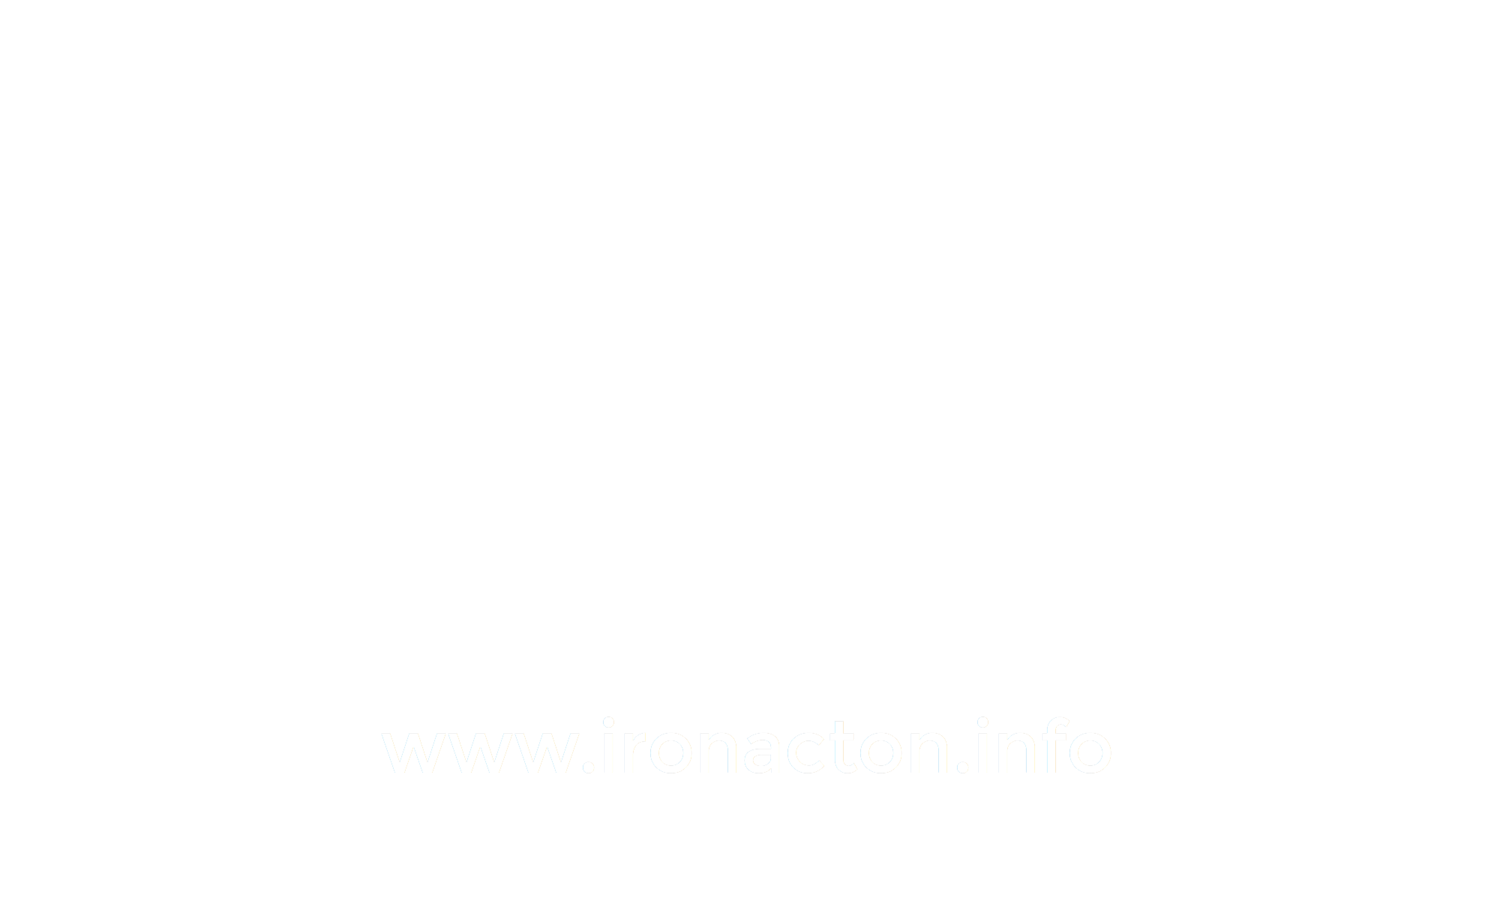 Local Poyntz - www.ironacton.info